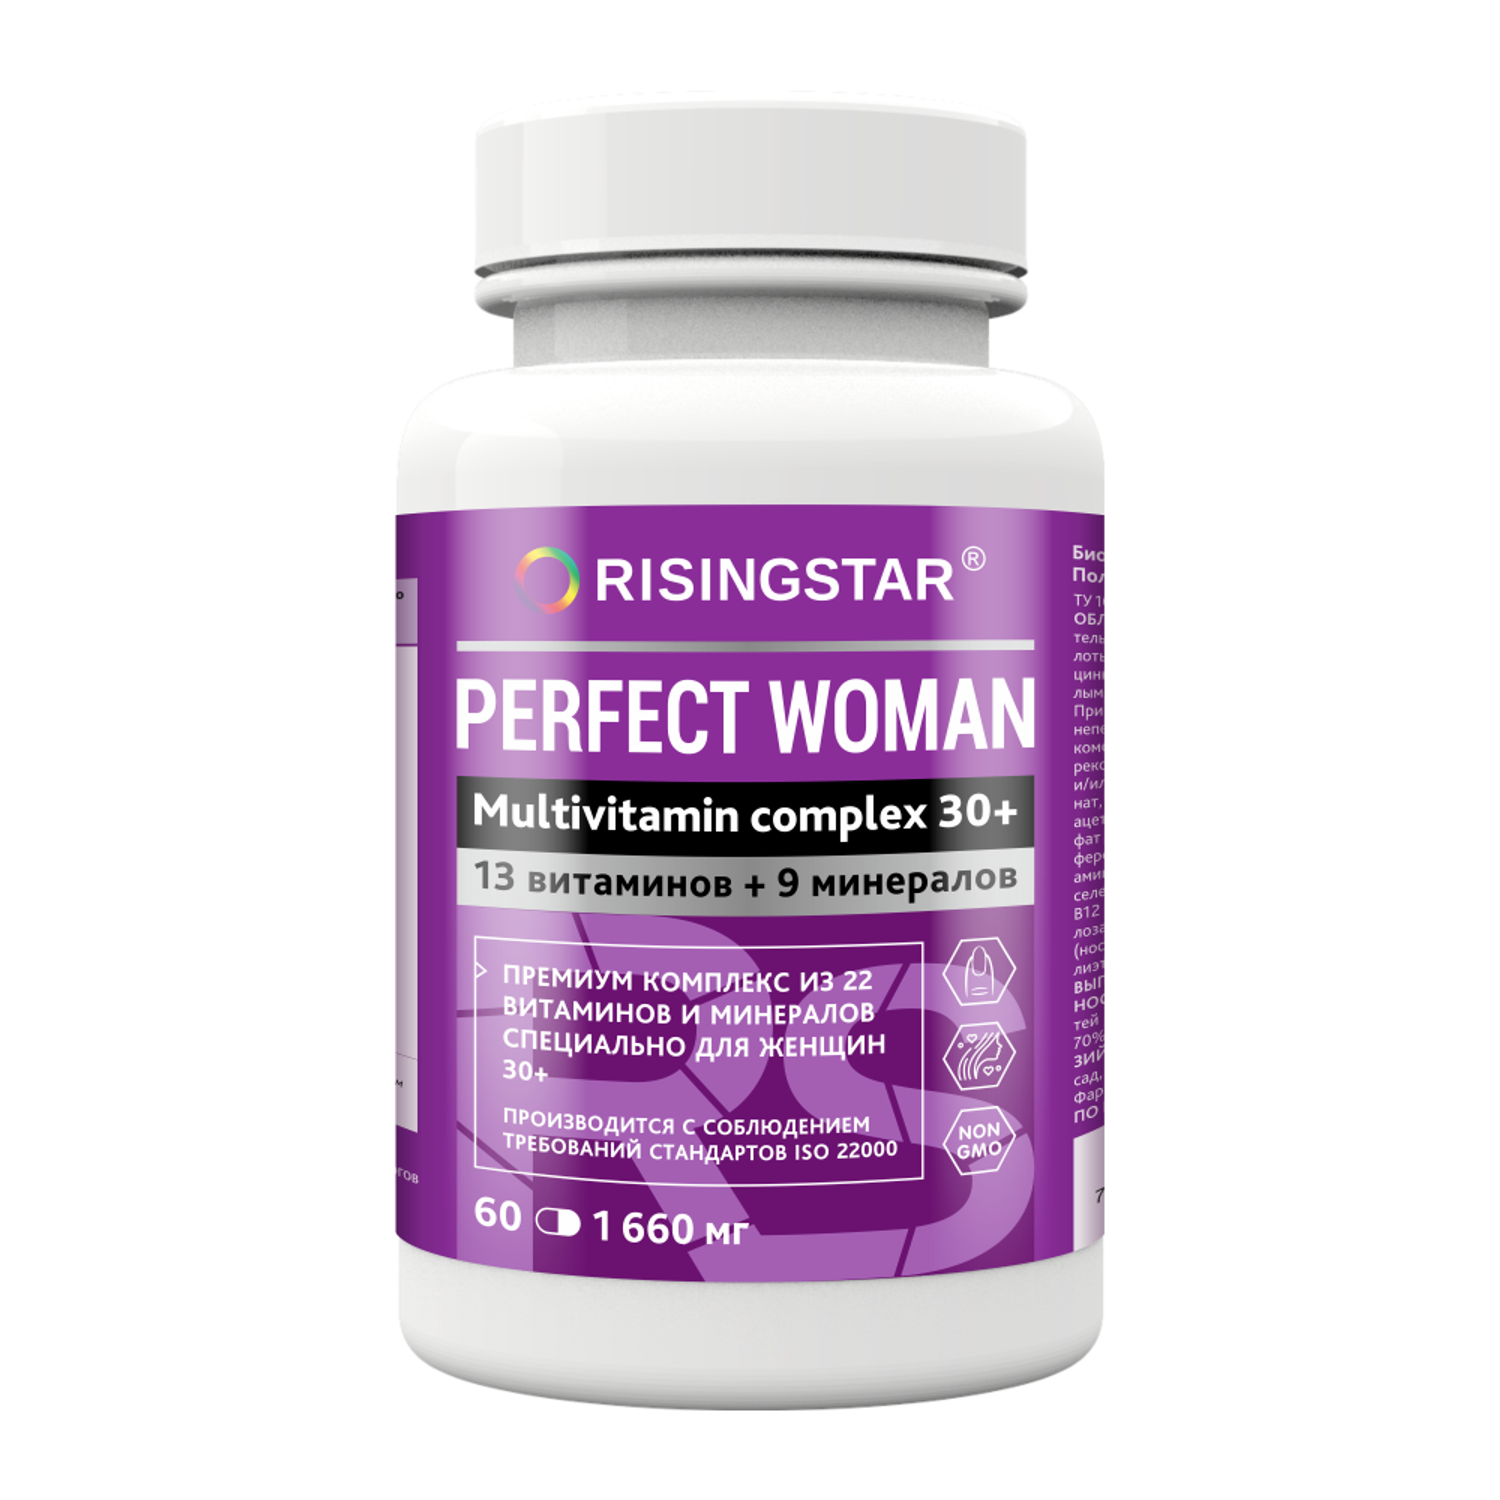 БАД Risingstar Мультивитаминный комплекс усиленная формула для женщин 60 таблеток - фото 1